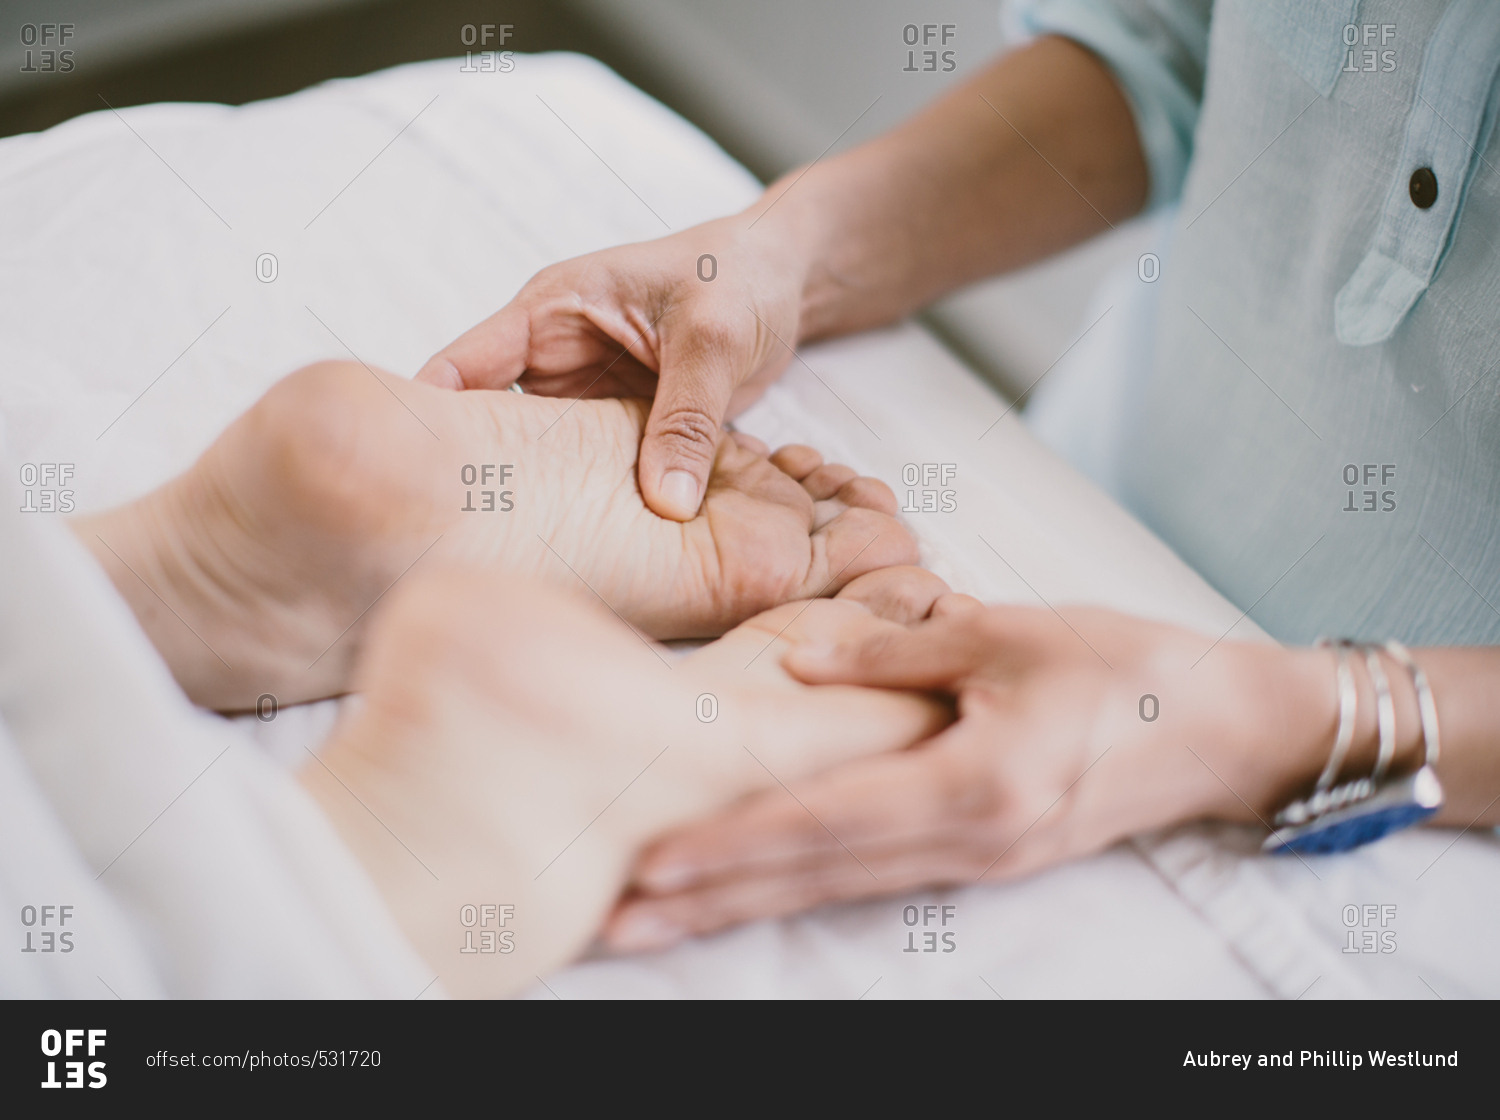 Masseuse giving a foot massage